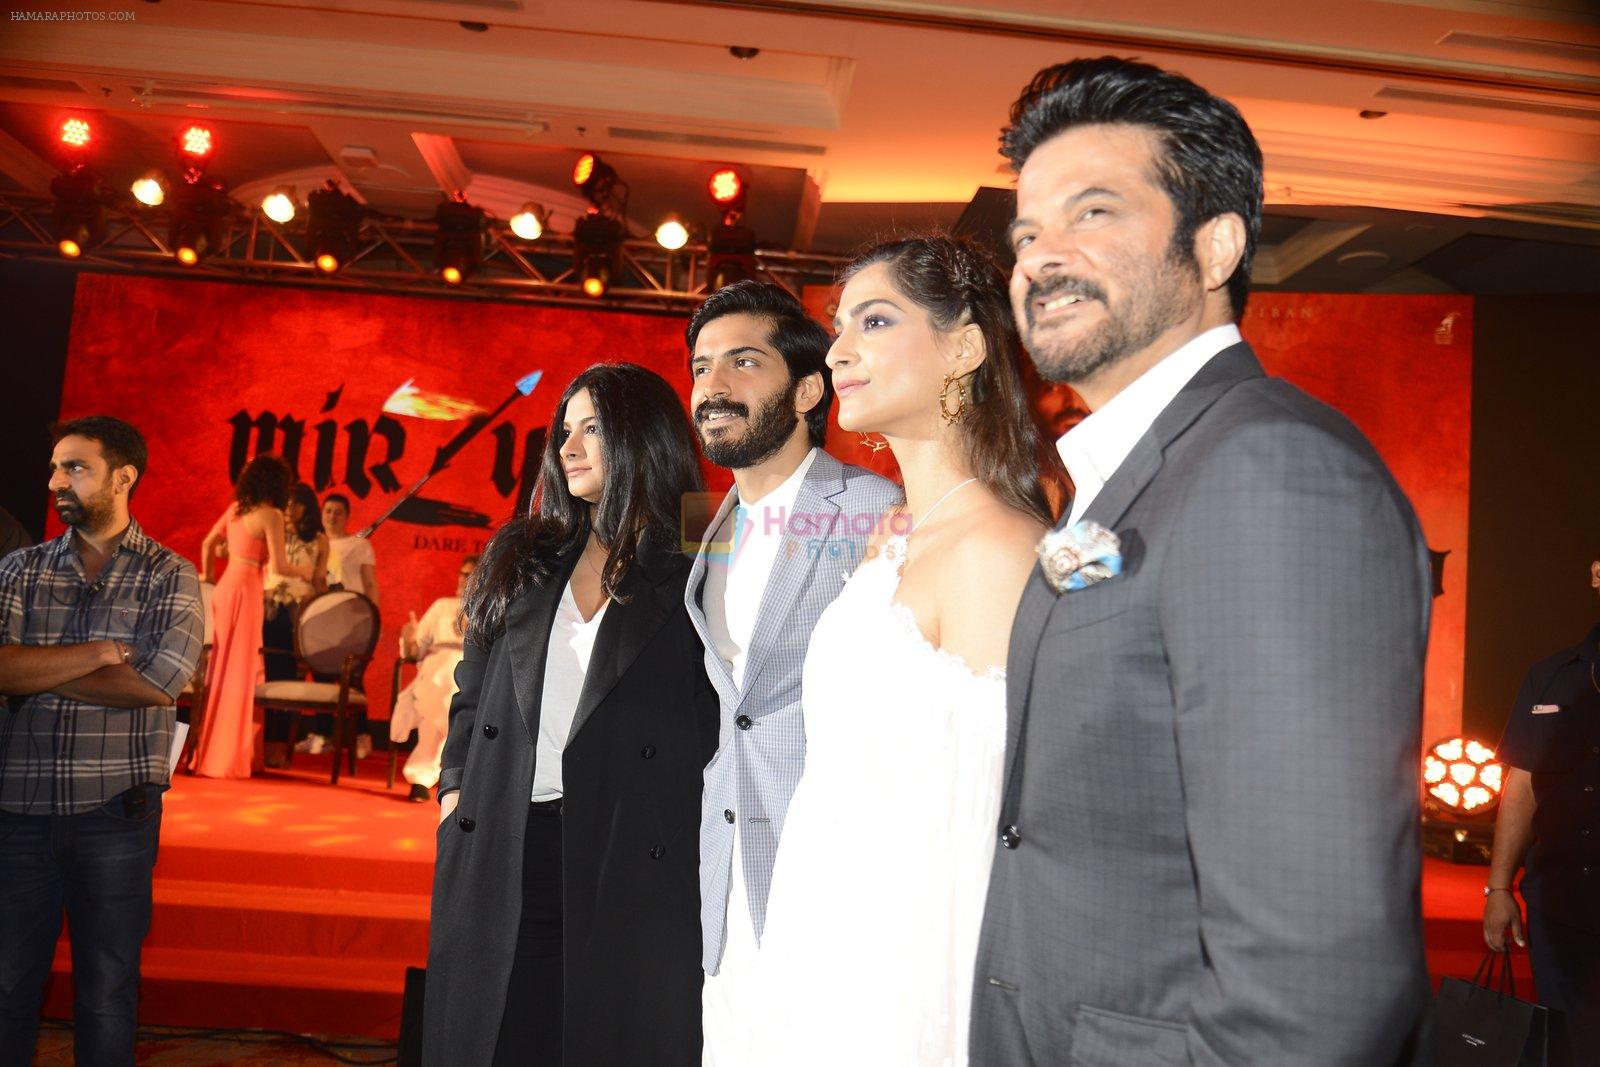 Rhea Kapoor, Sonam Kapoor, Harshvardhan Kapoor,Anil kapoor at the Audio release of Mirzya on 13th Sept 2016